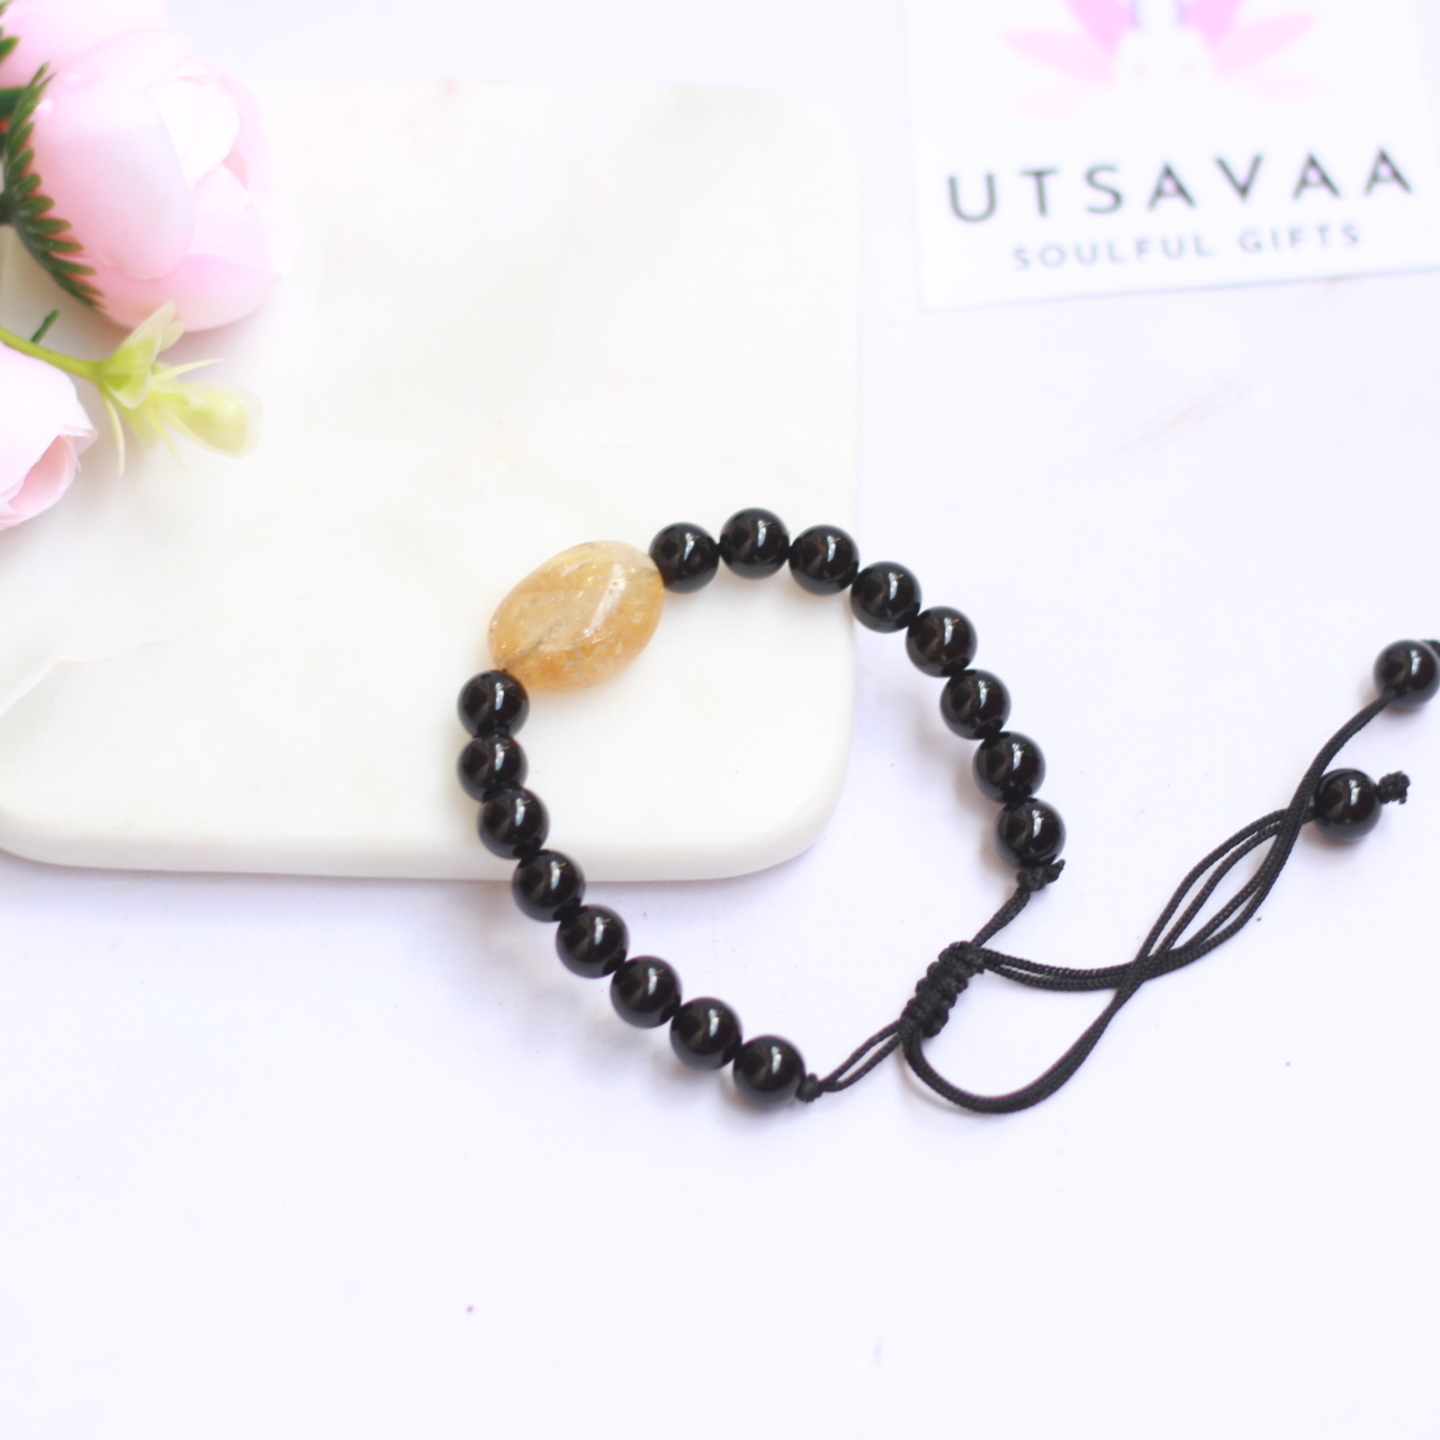 Success and Protection Bracelet - Utsavaa